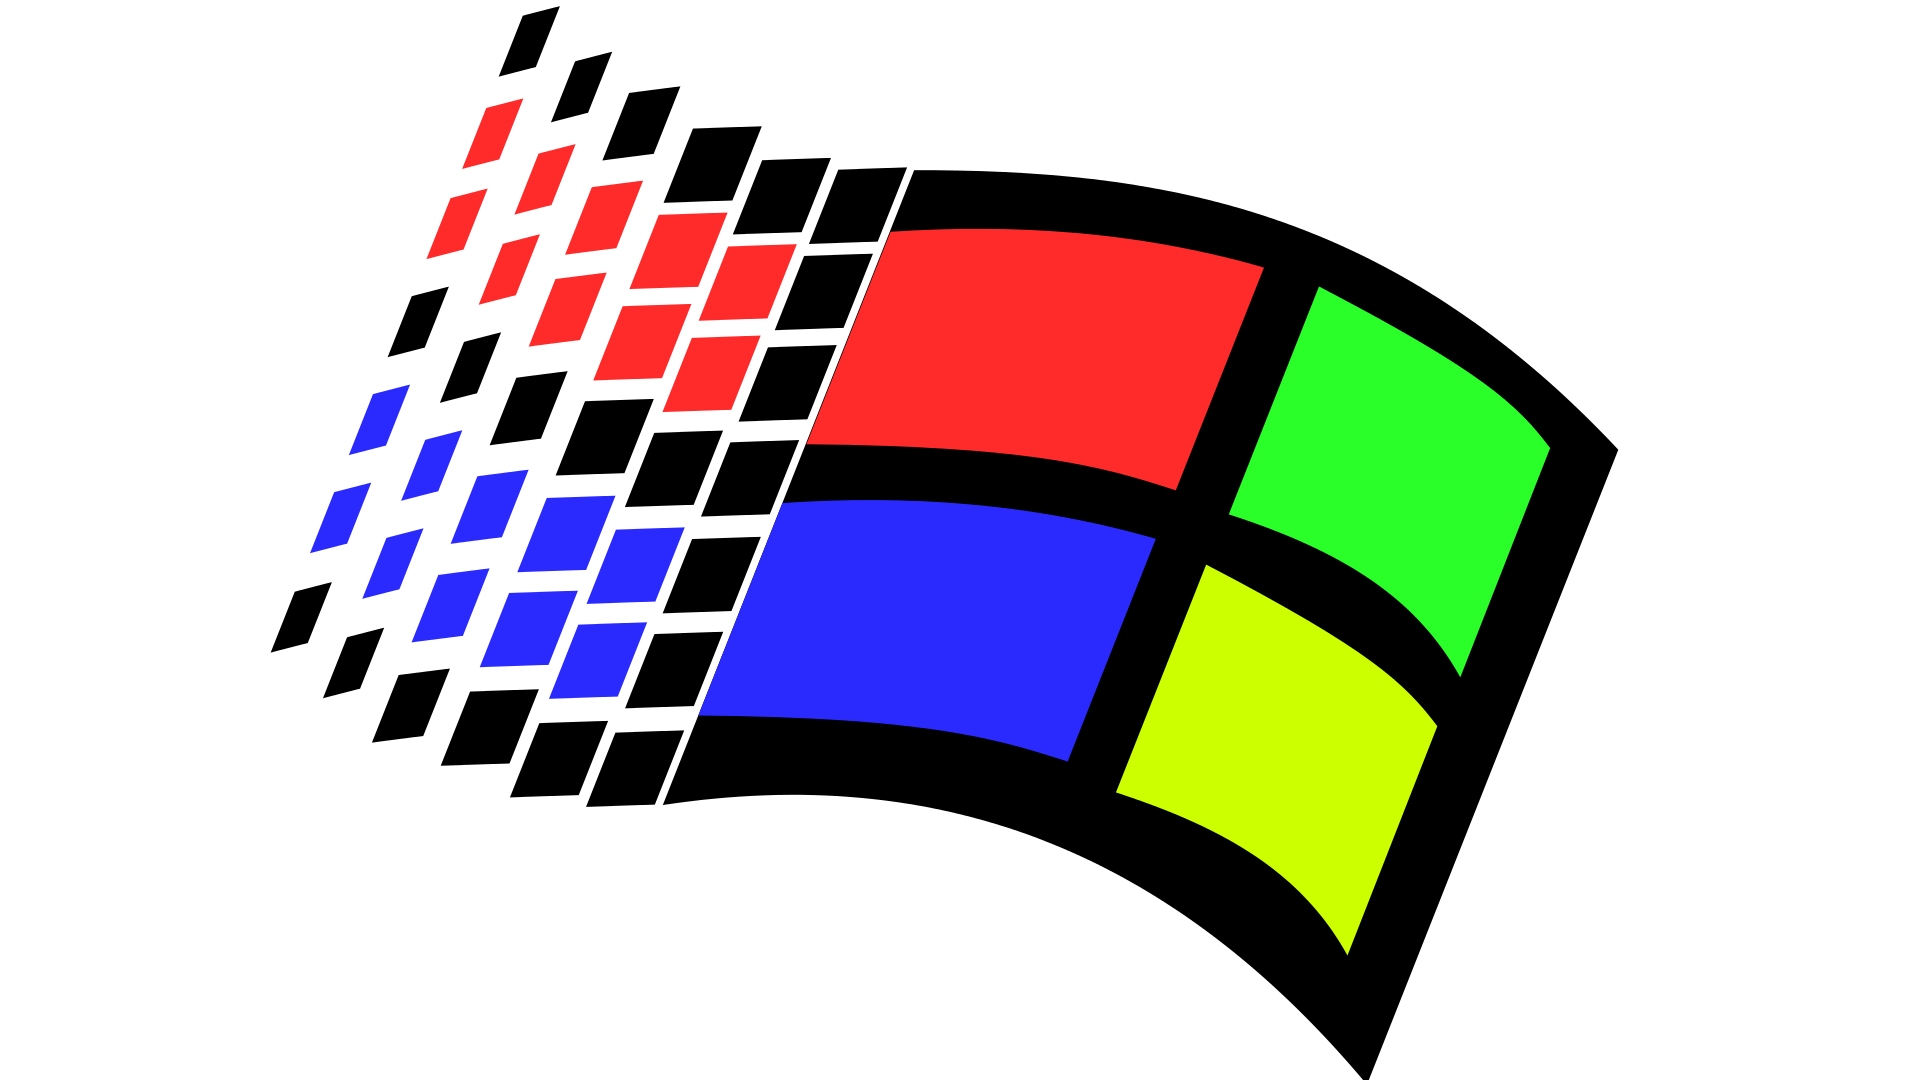 Windows 95 Logo - Windows 95 Logos